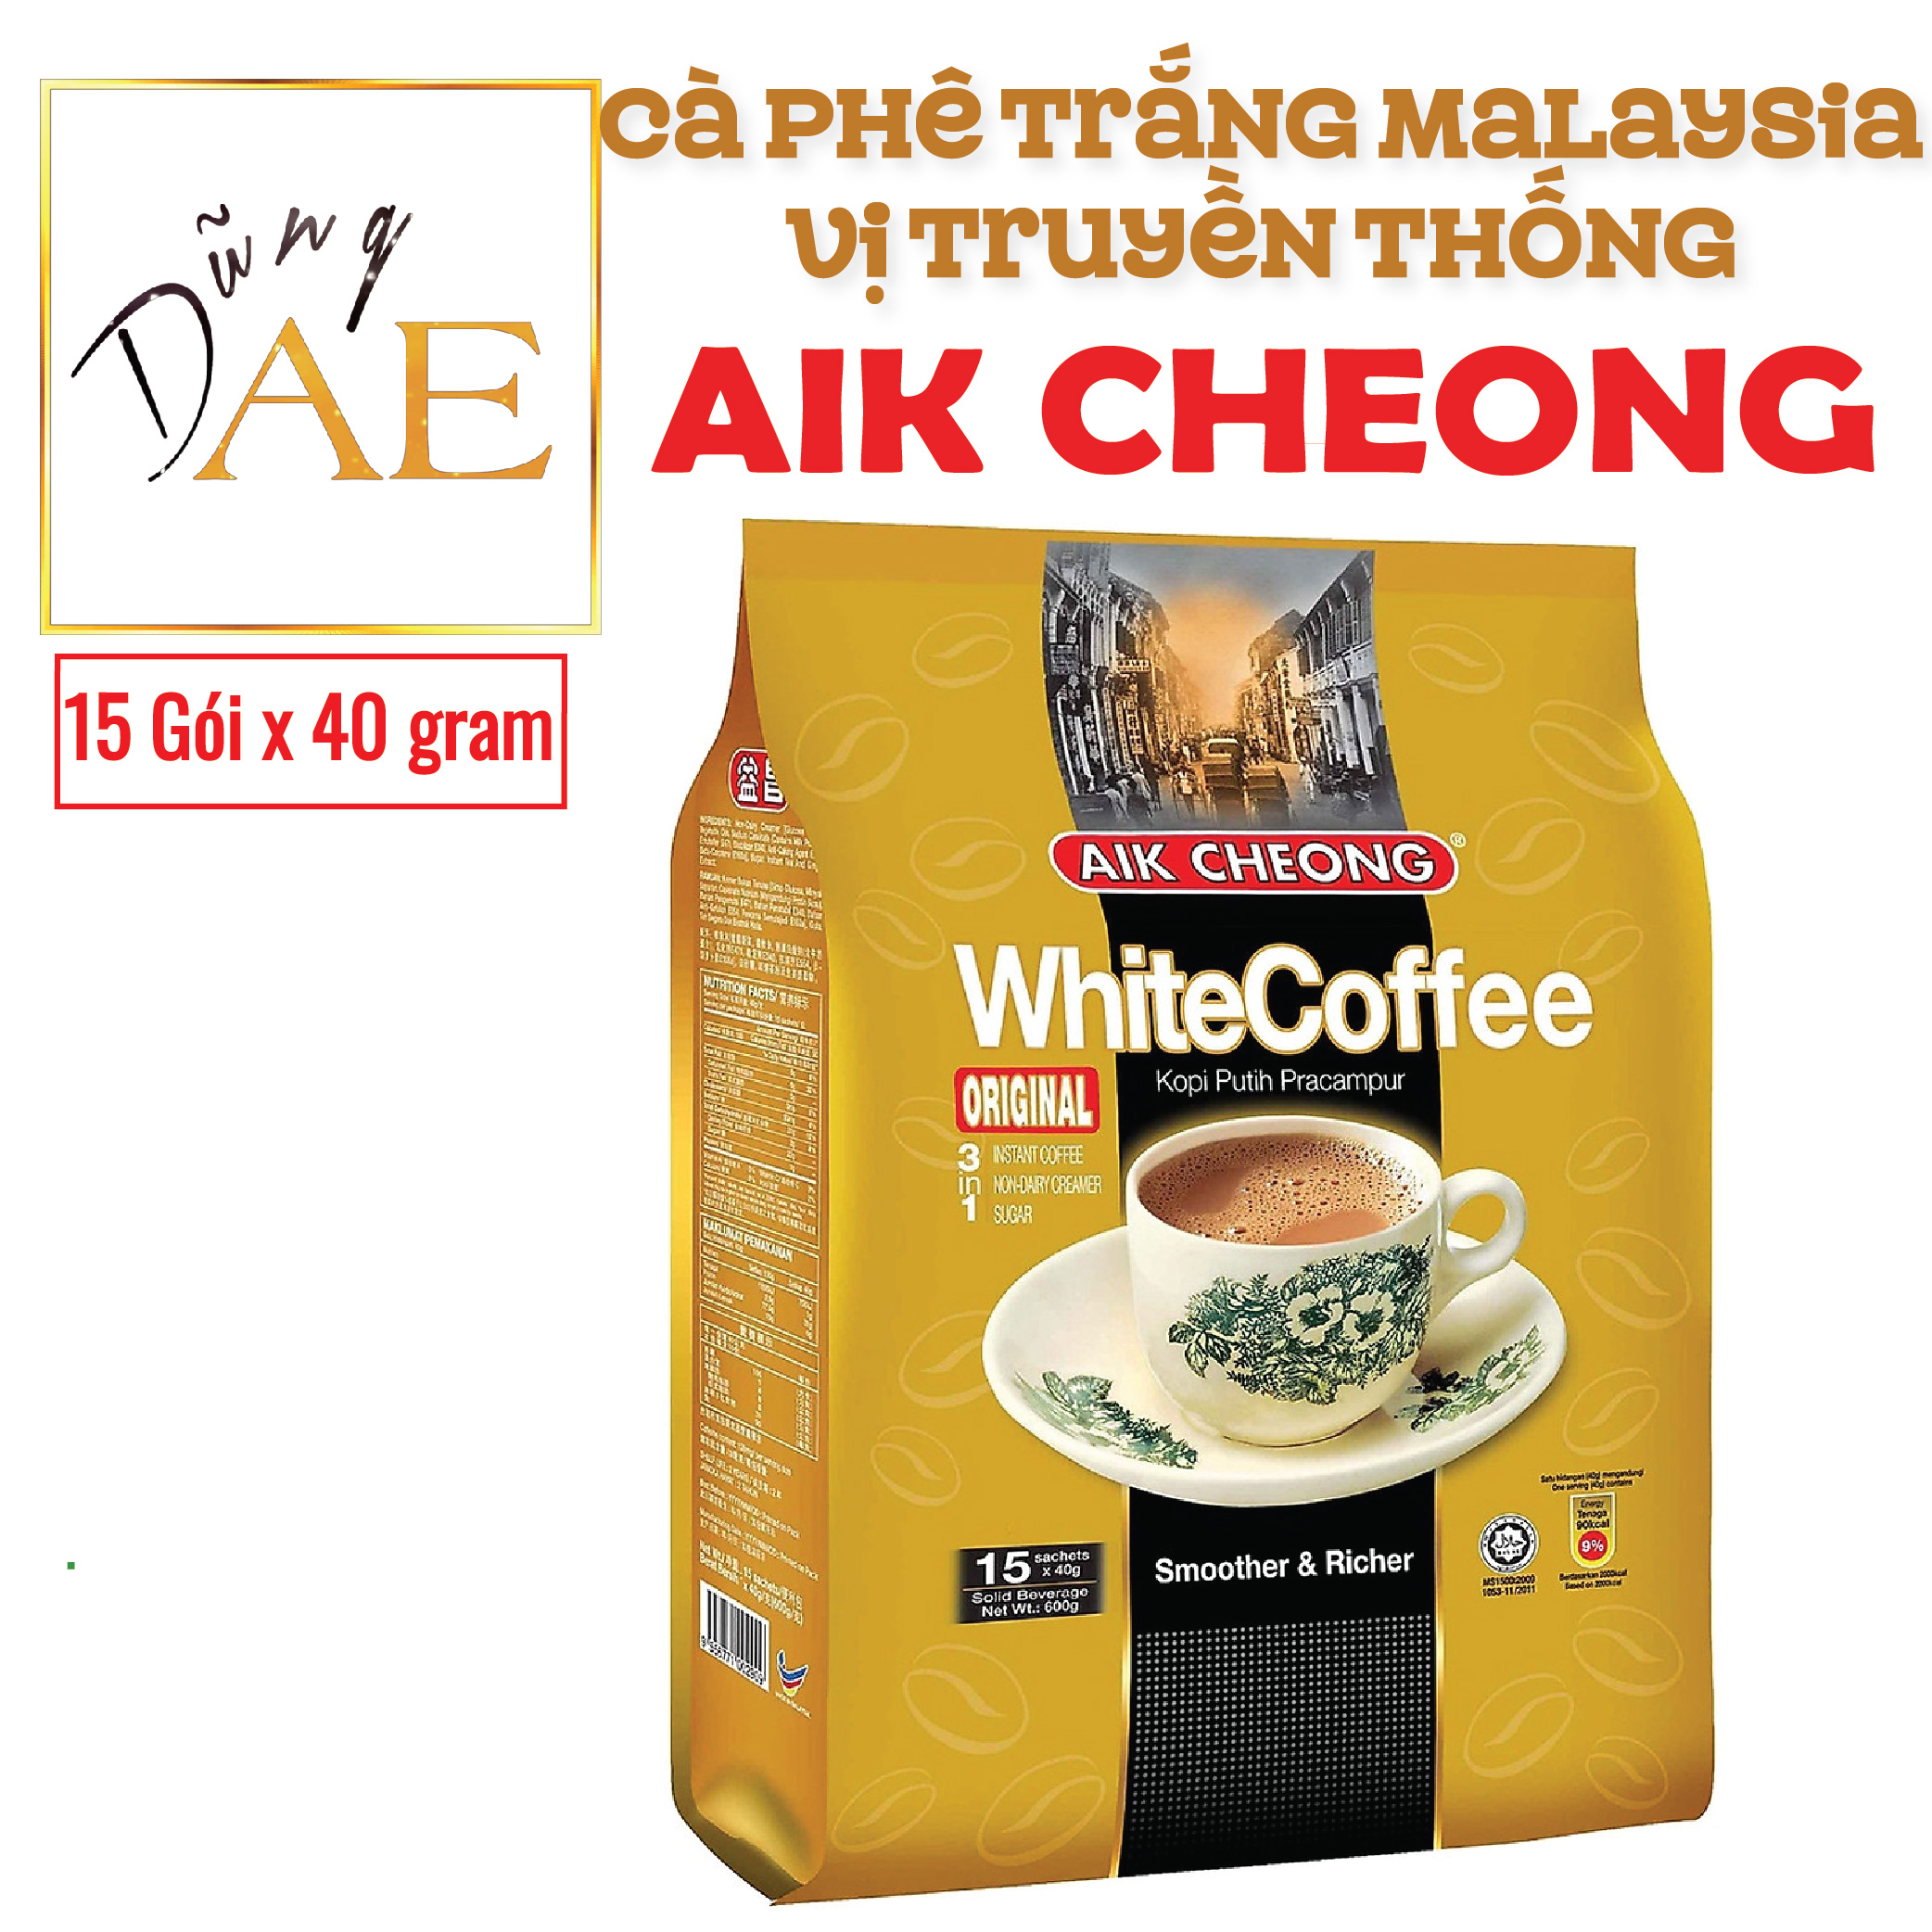 White Coffee 3 in 1 Aik Cheong Malaysia 600g